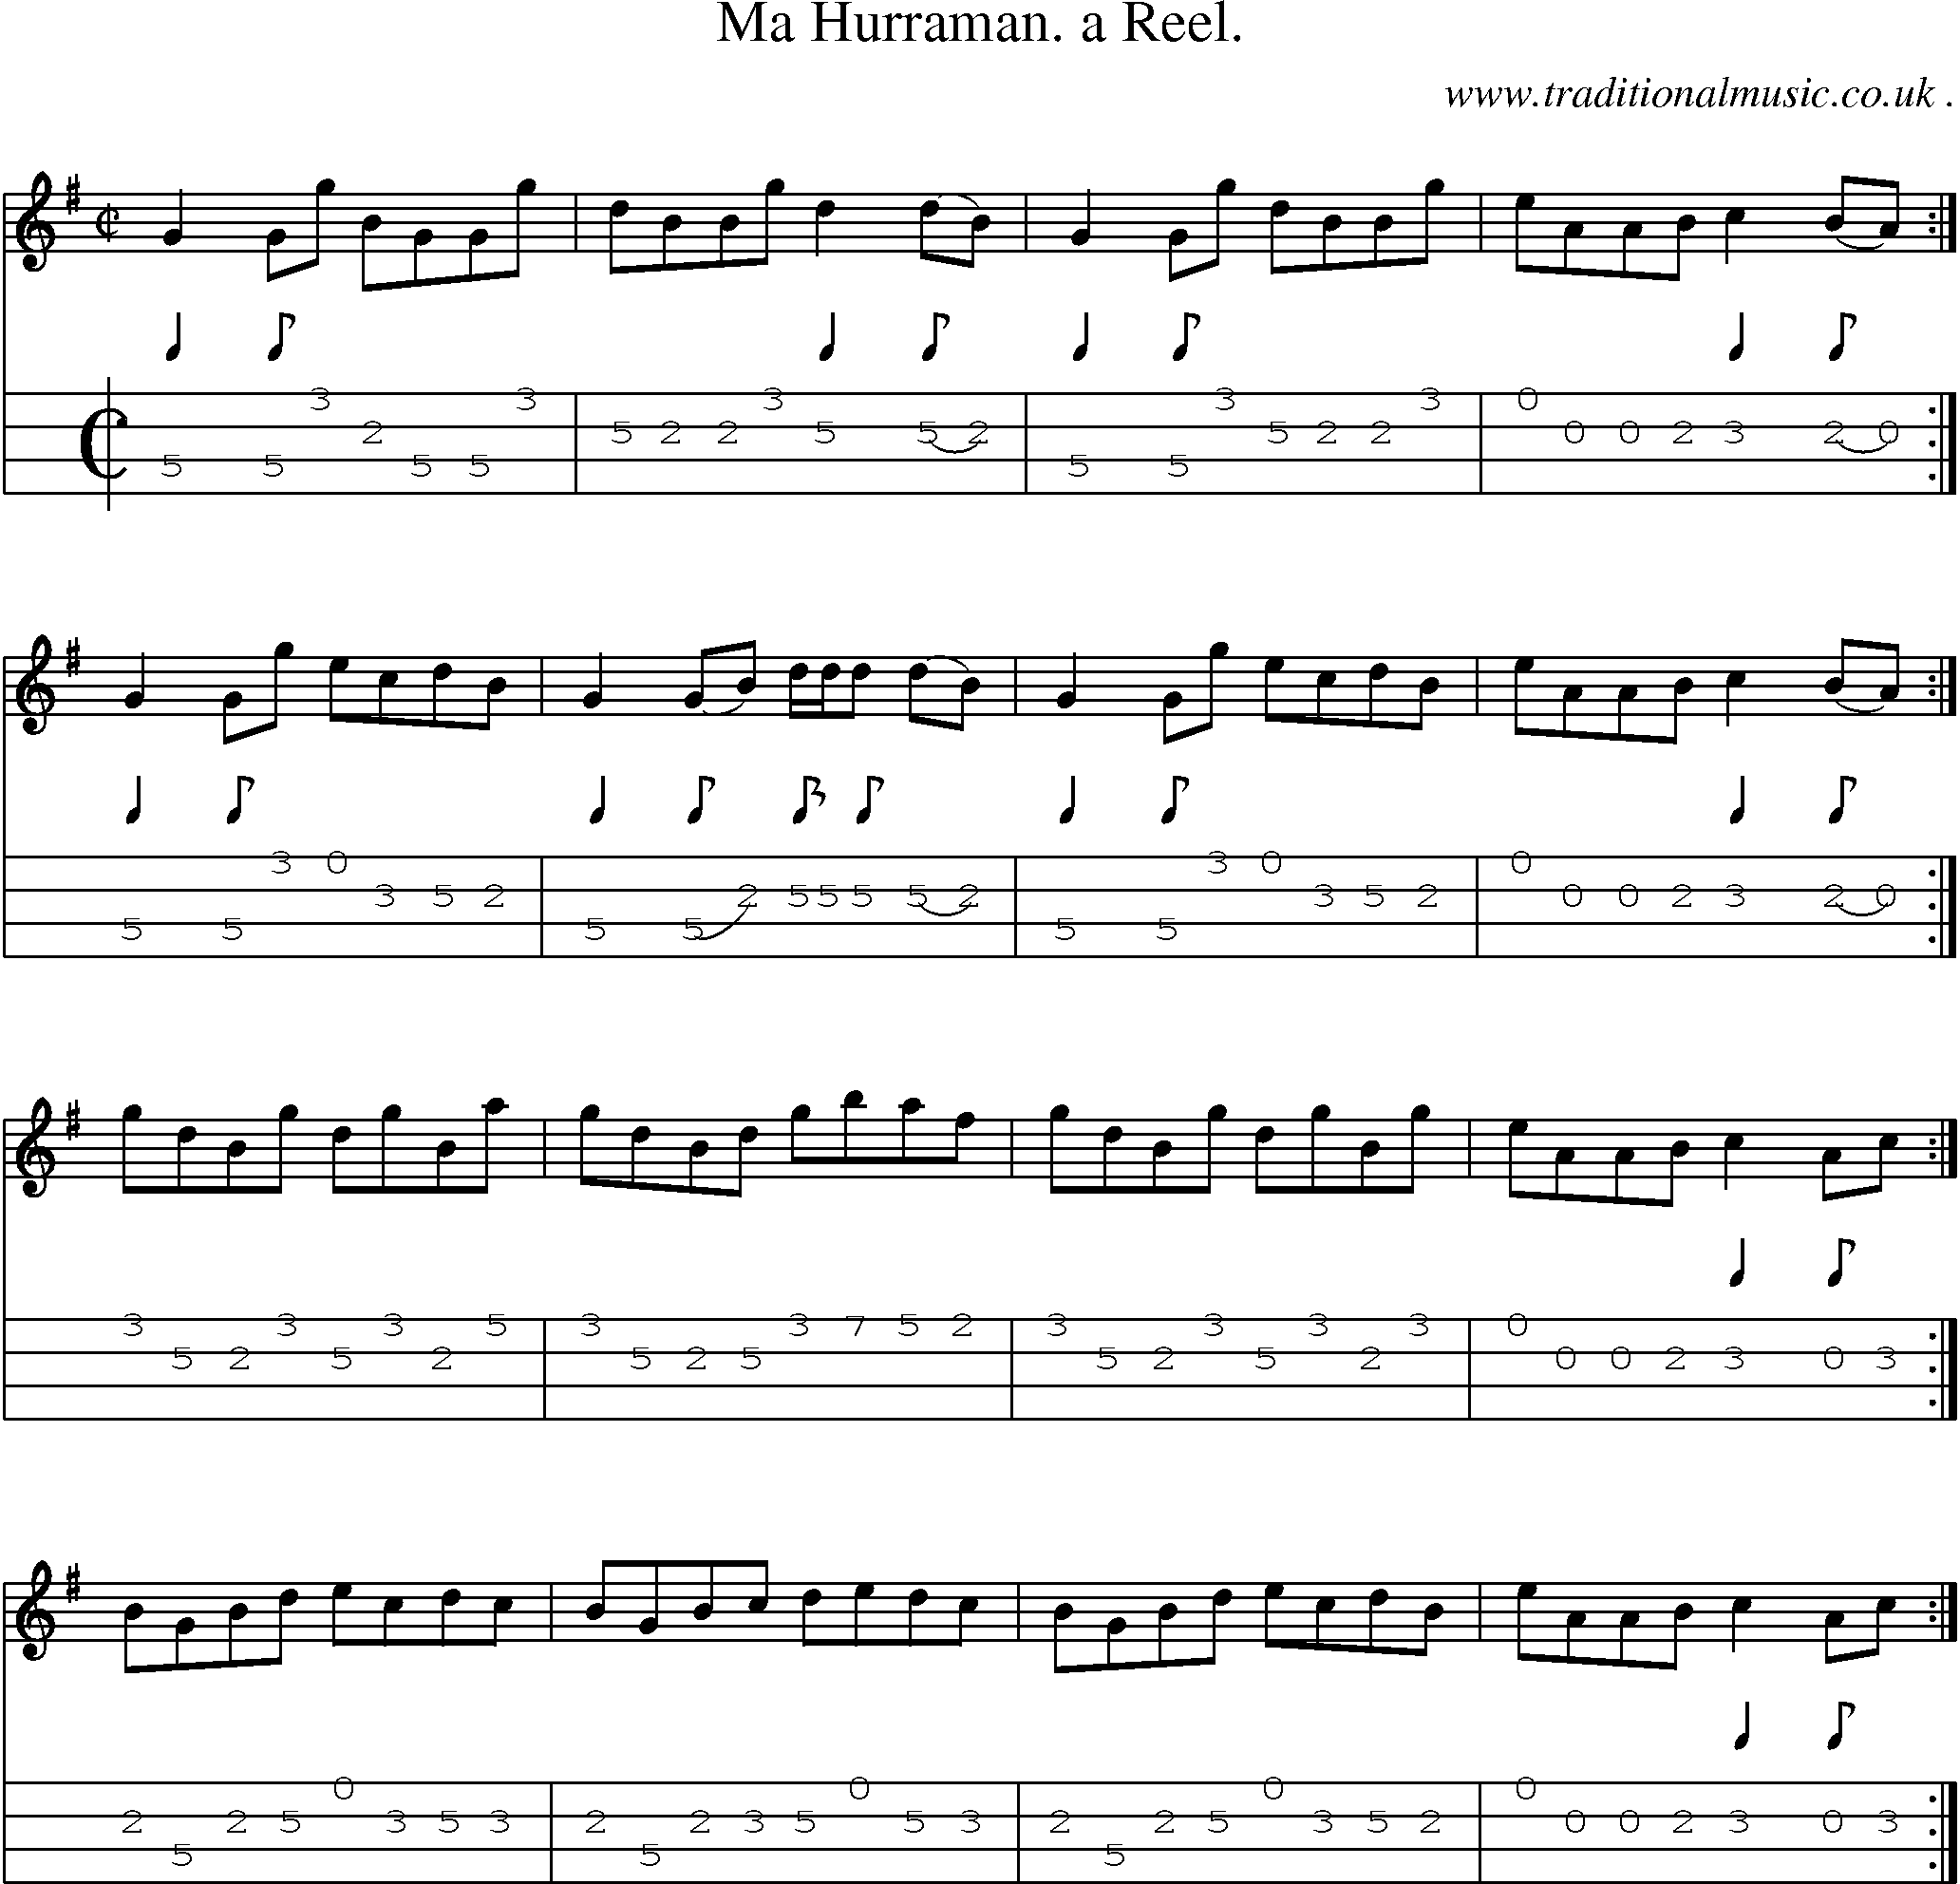 Sheet-Music and Mandolin Tabs for Ma Hurraman A Reel